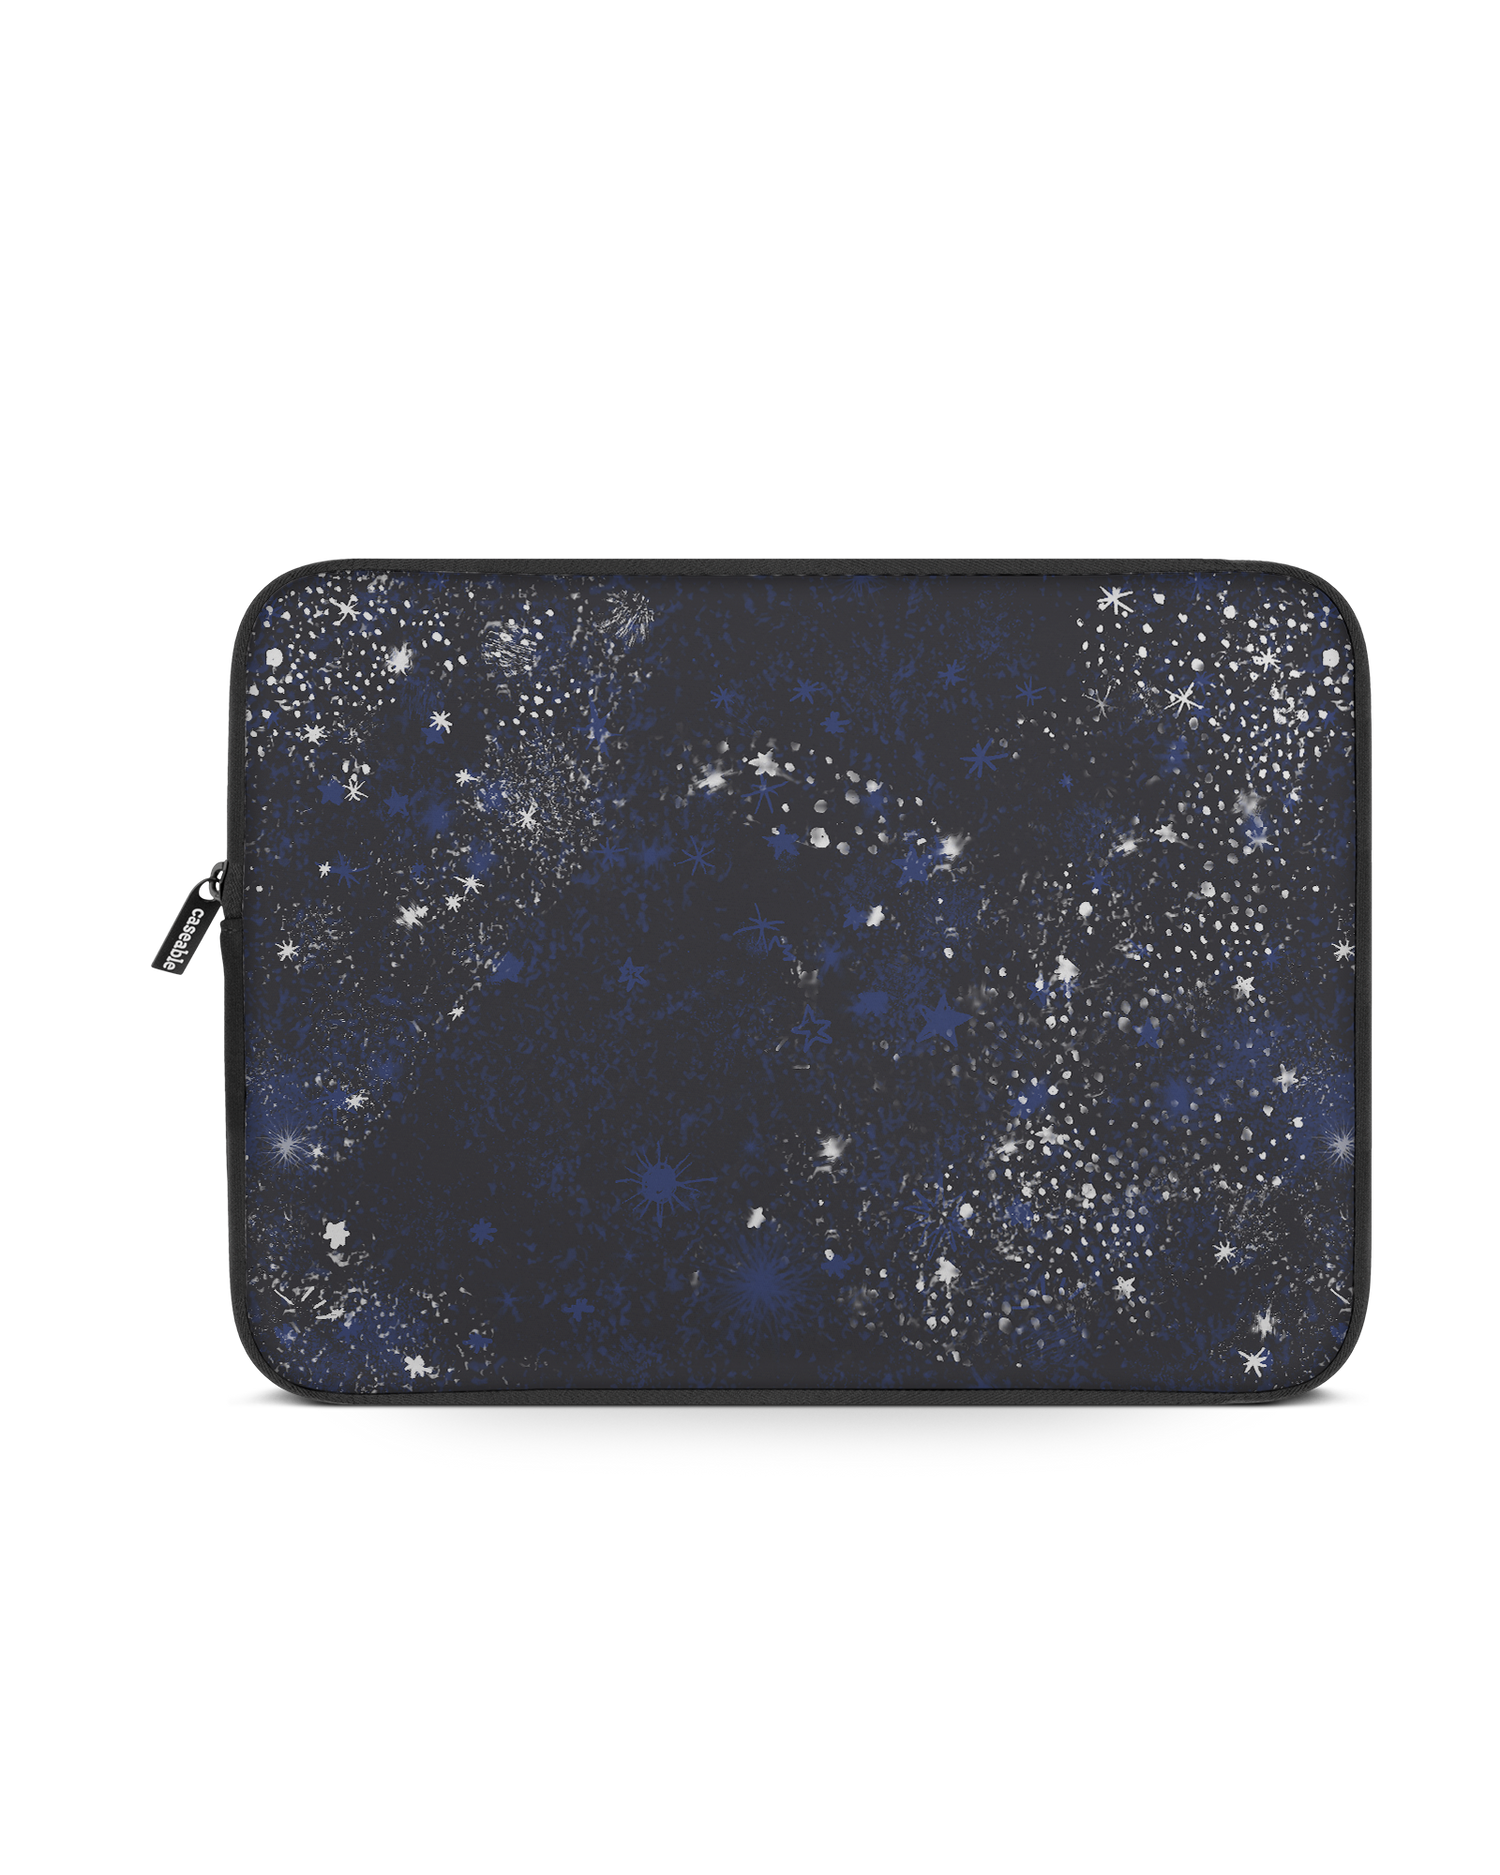 Starry Night Sky Laptophülle 13 Zoll: Vorderansicht